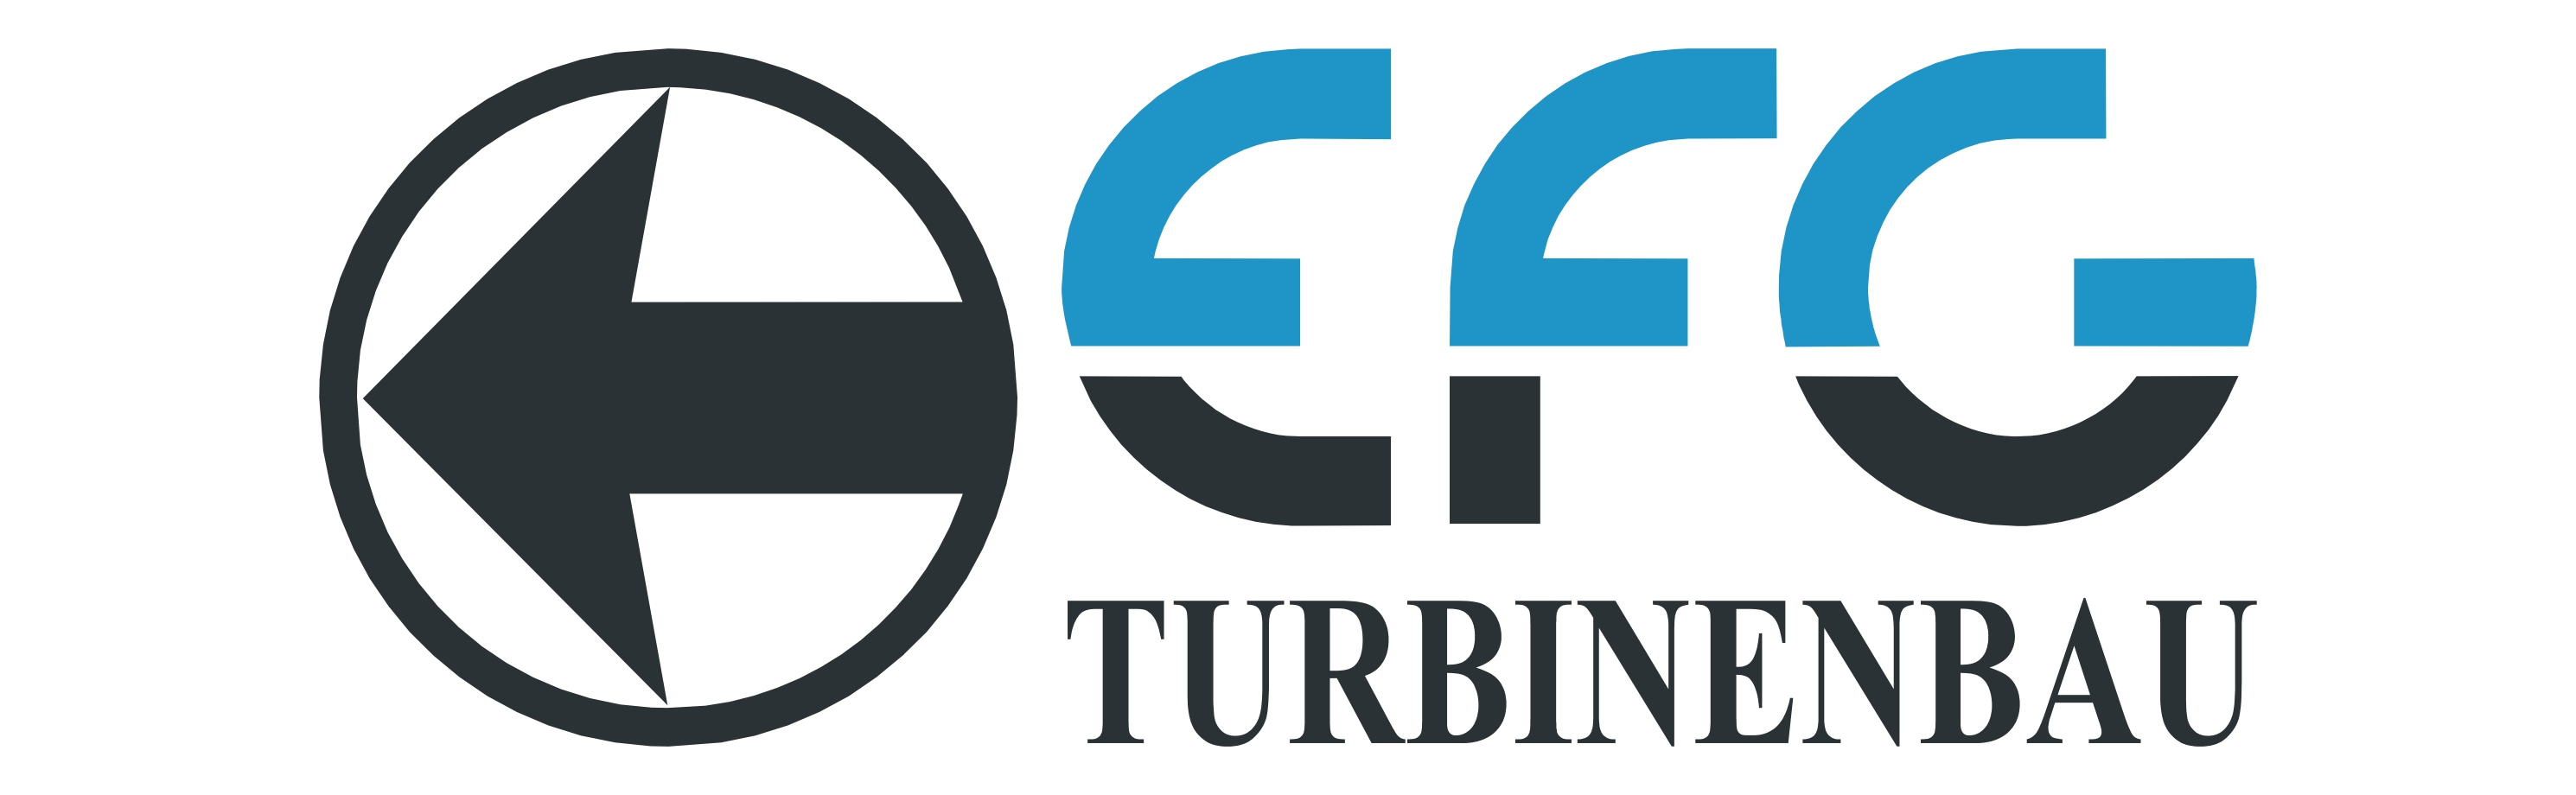 EFG Turbinenbau Logo